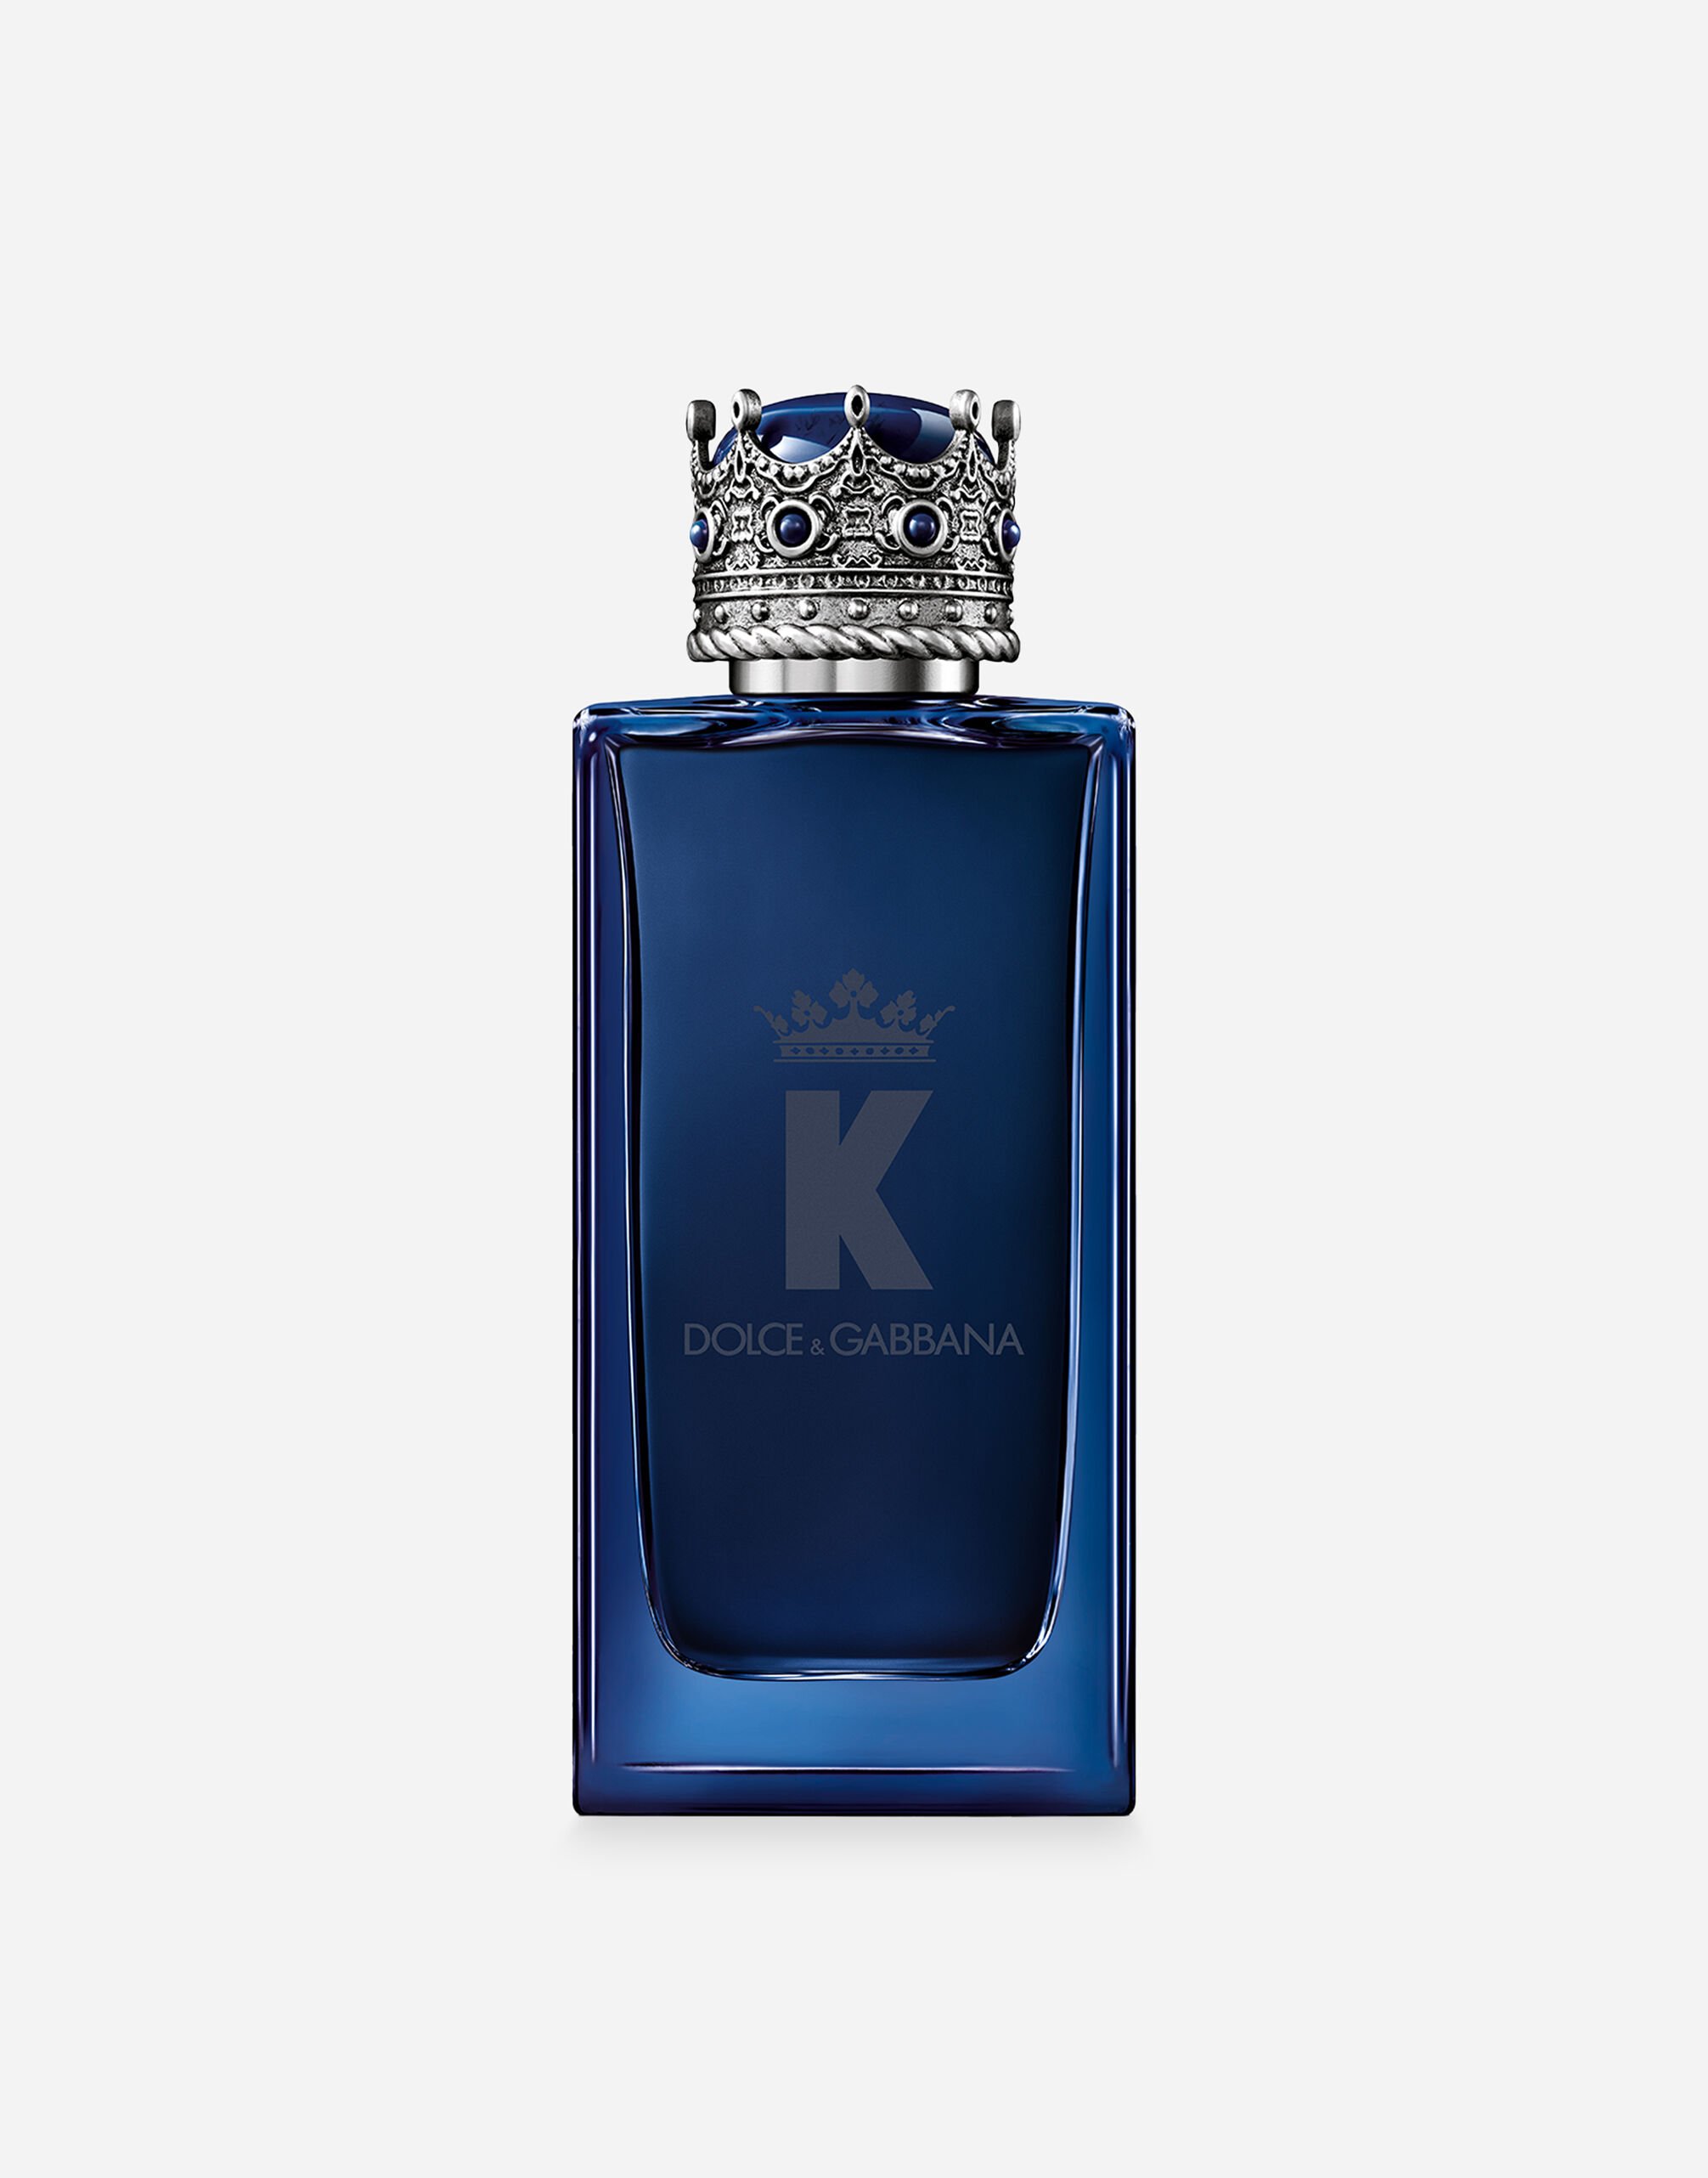 Dolce&Gabbana K by Dolce&Gabbana Eau de Parfum Intense Blau G9ZY5LHULR0